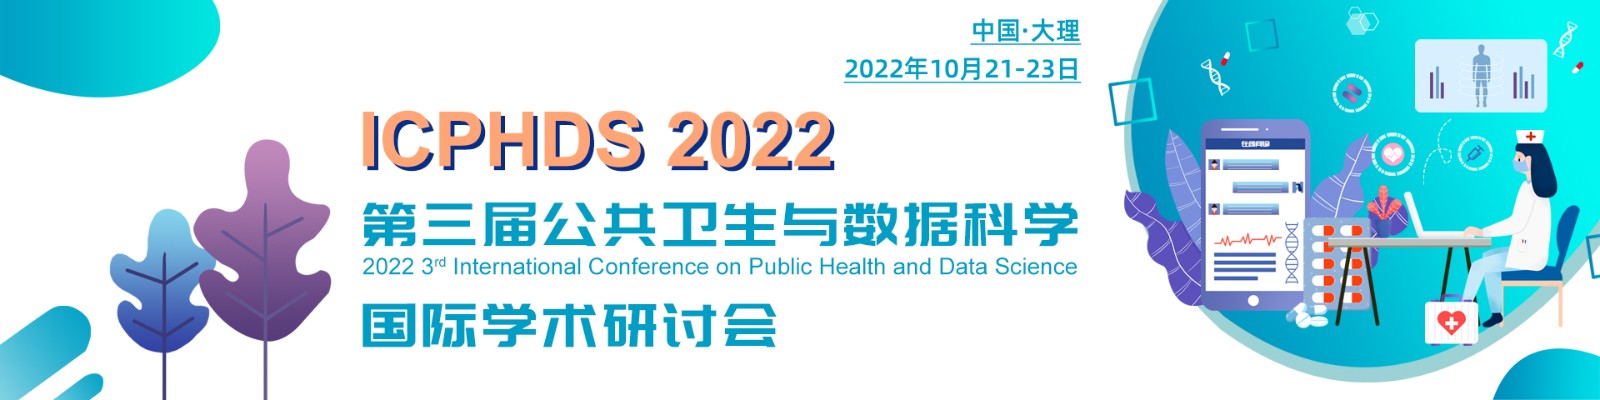 10月大理-ICPHDS-2022-banner-陈军-20220301.jpg